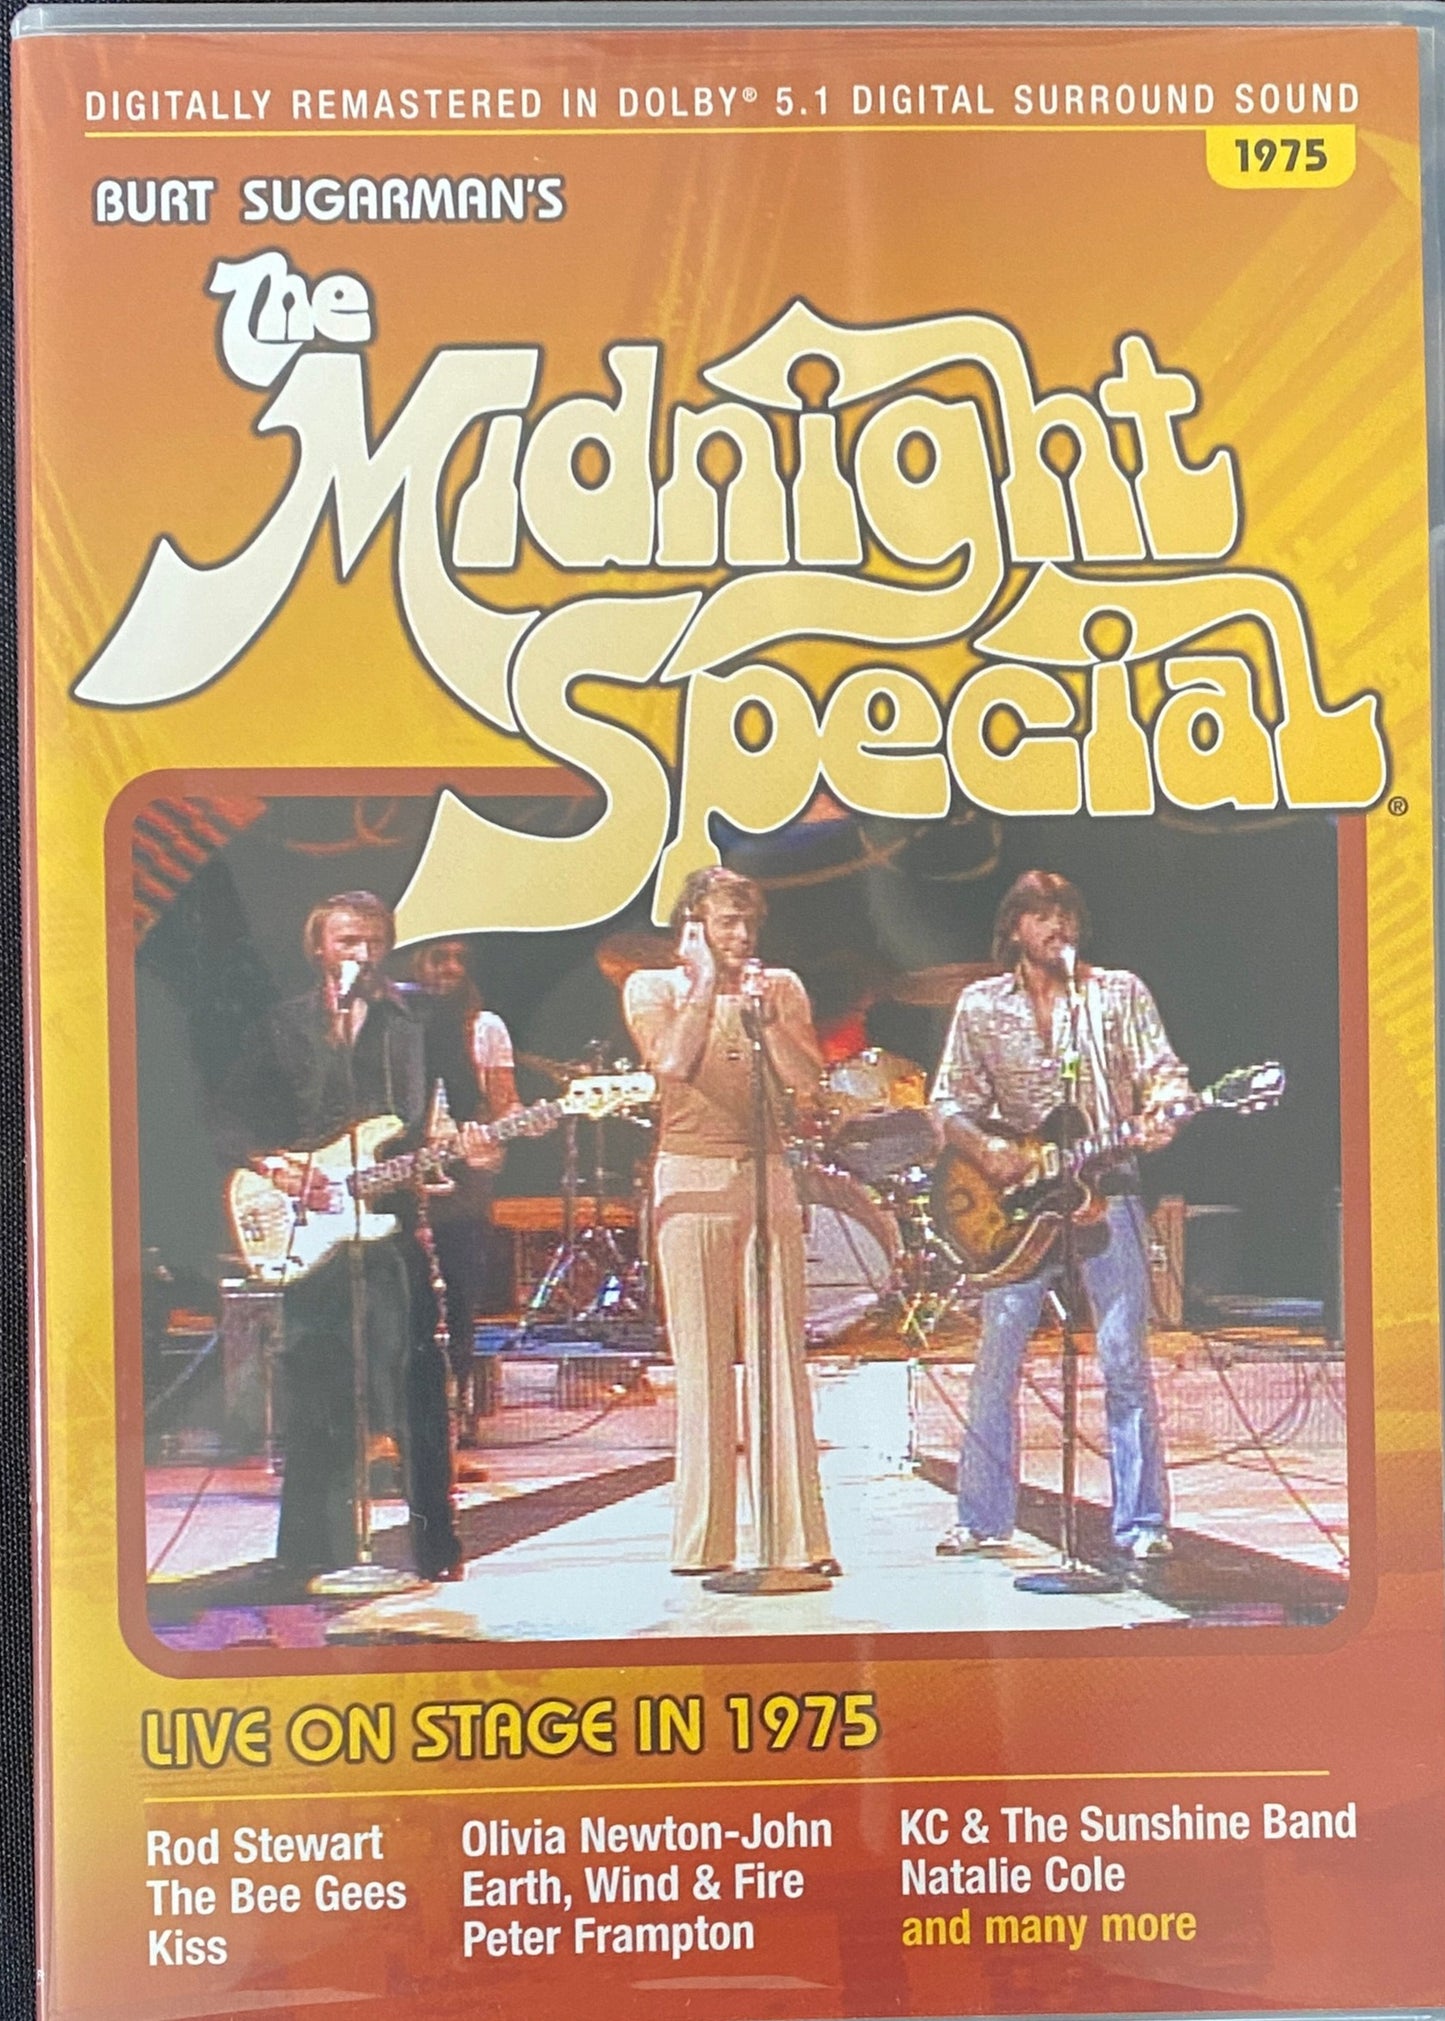 Burt Sugarman's The Midnight Special Live - 1975